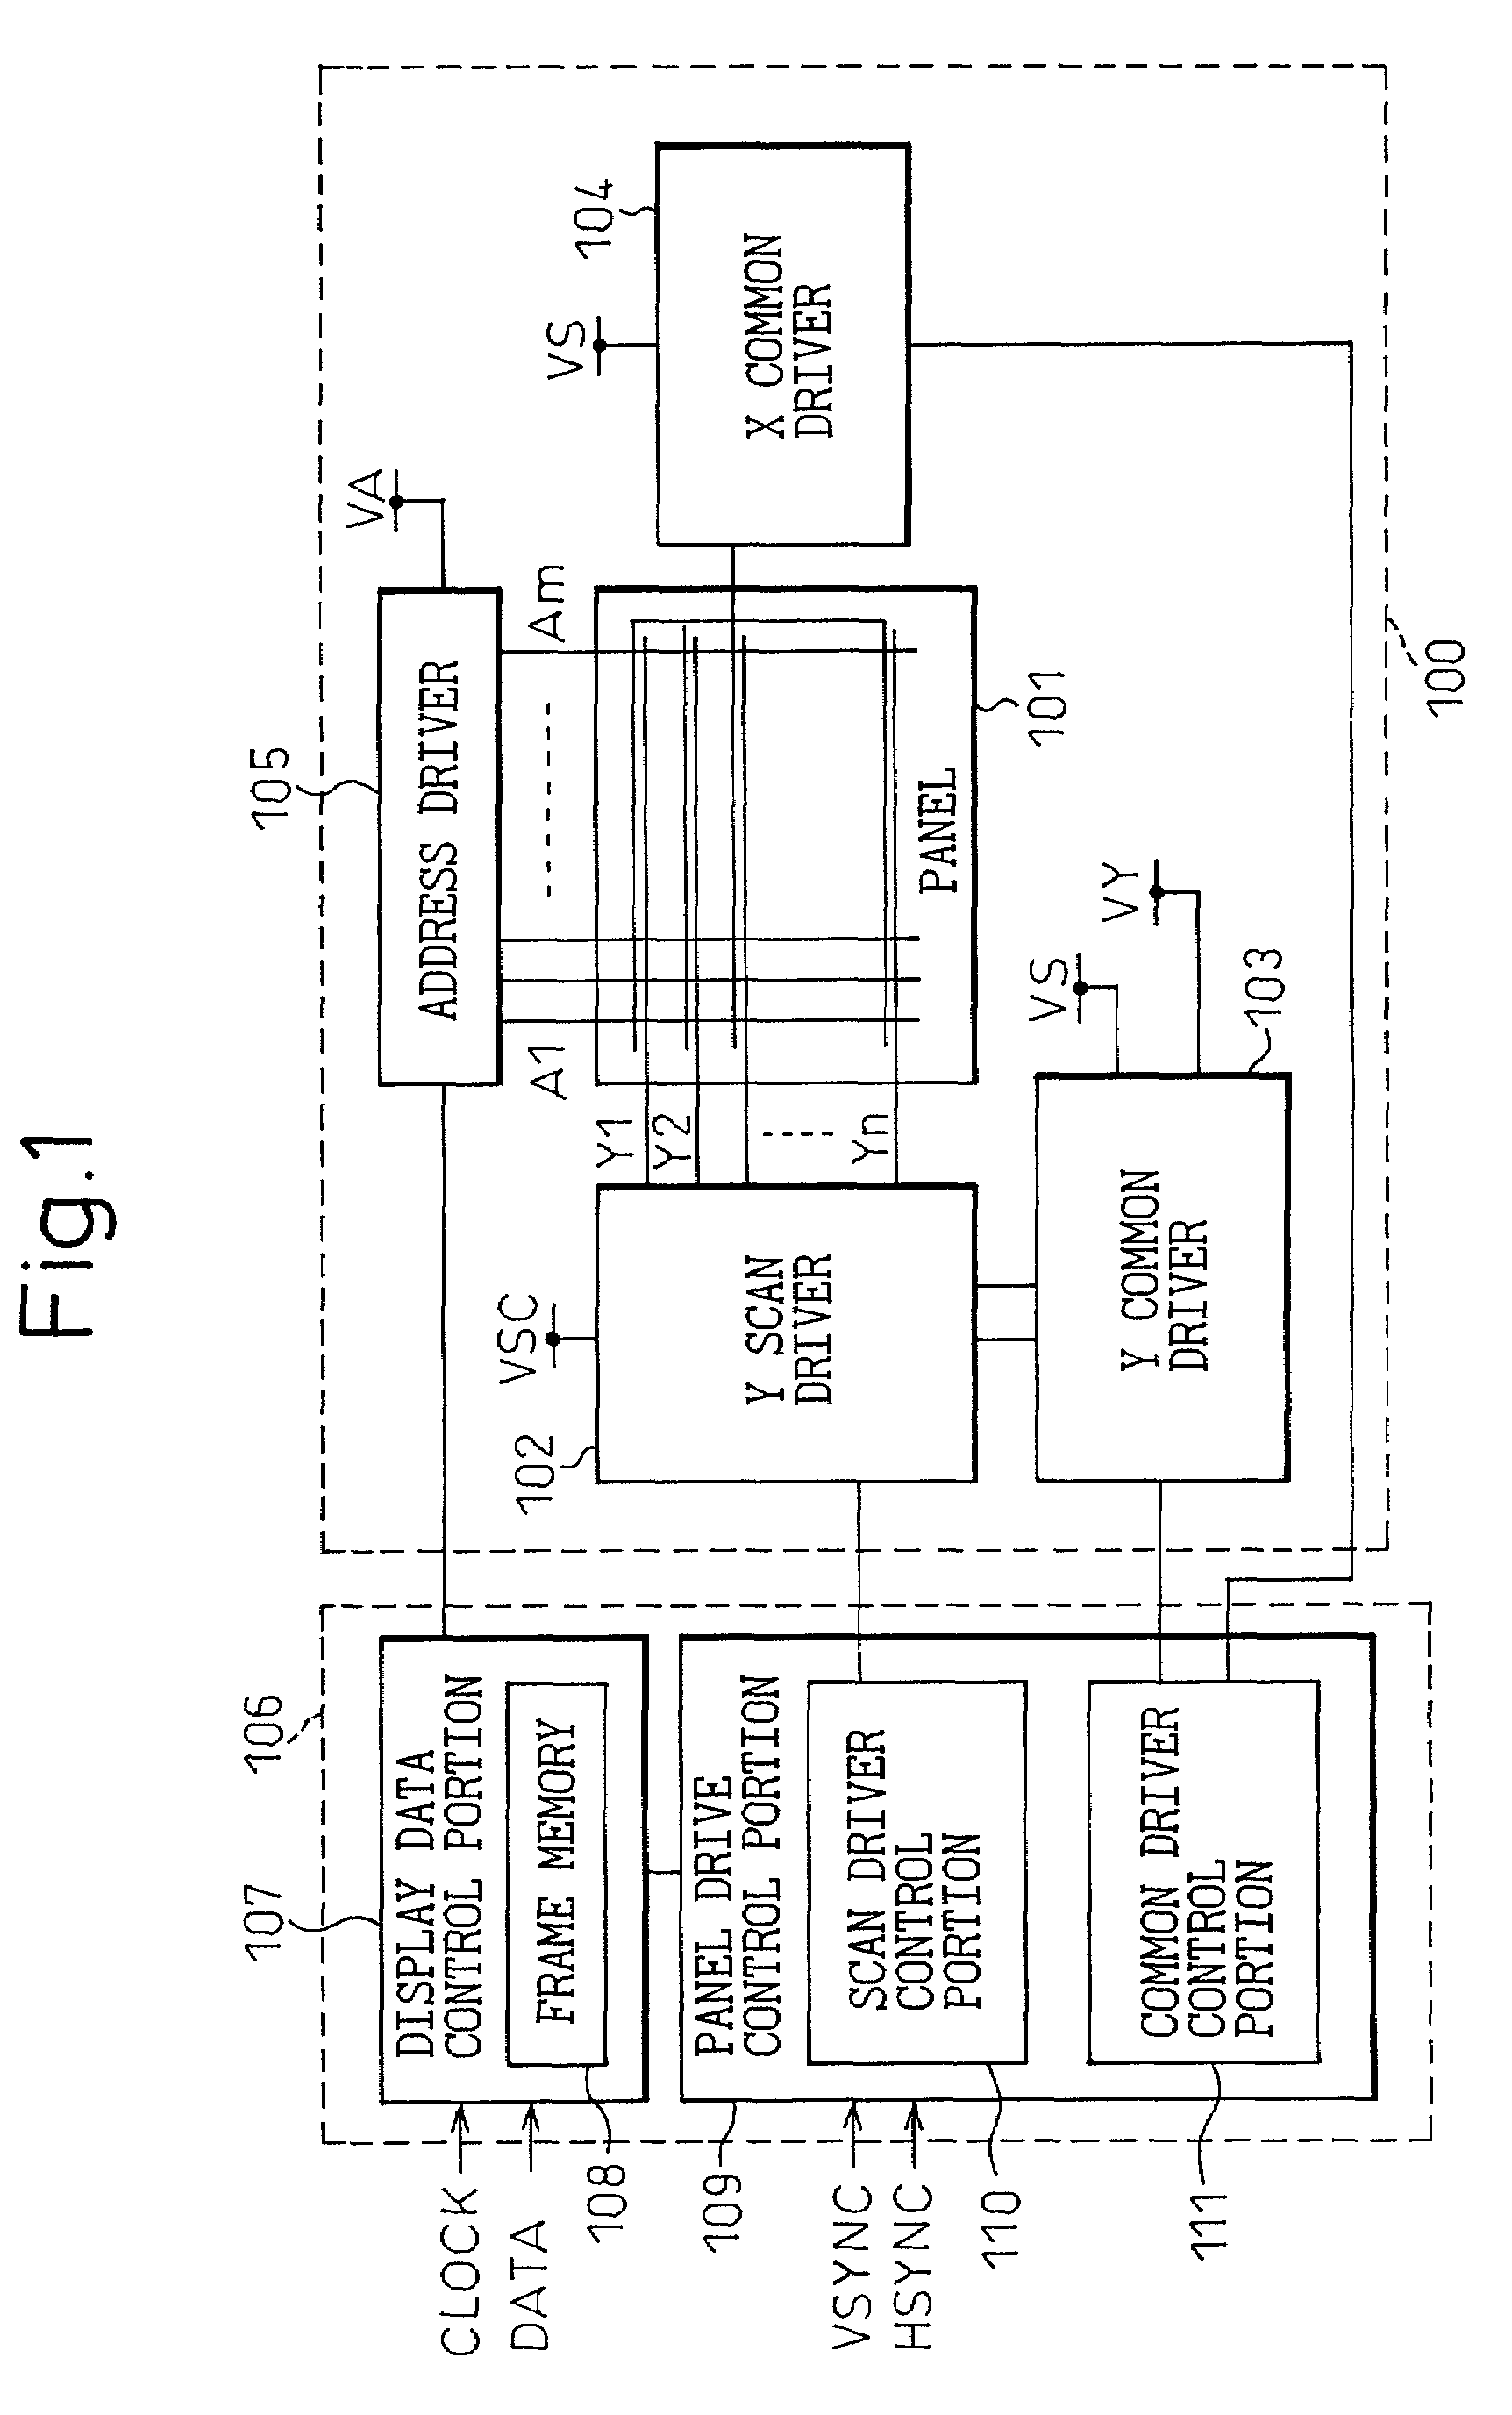 Method of driving display apparatus and plasma display apparatus